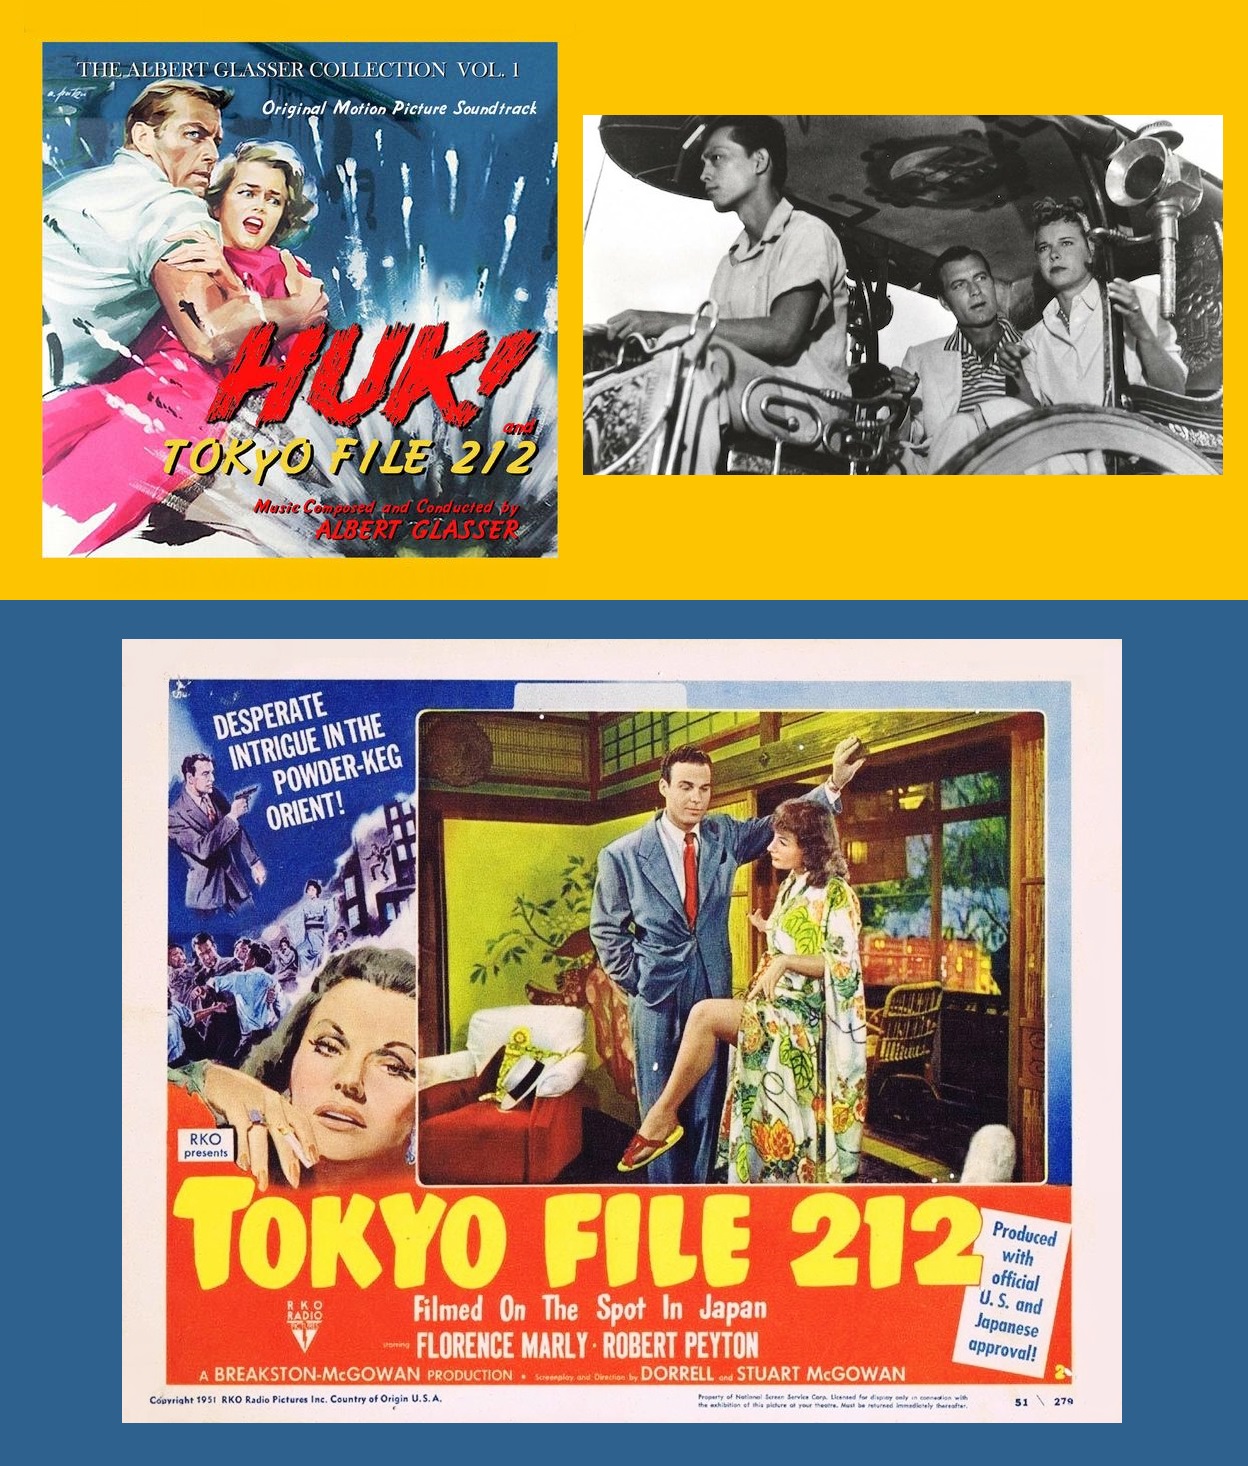 The Albert Glasser Collection Vol.1: Huk! / Tokyo File 212 (digital)